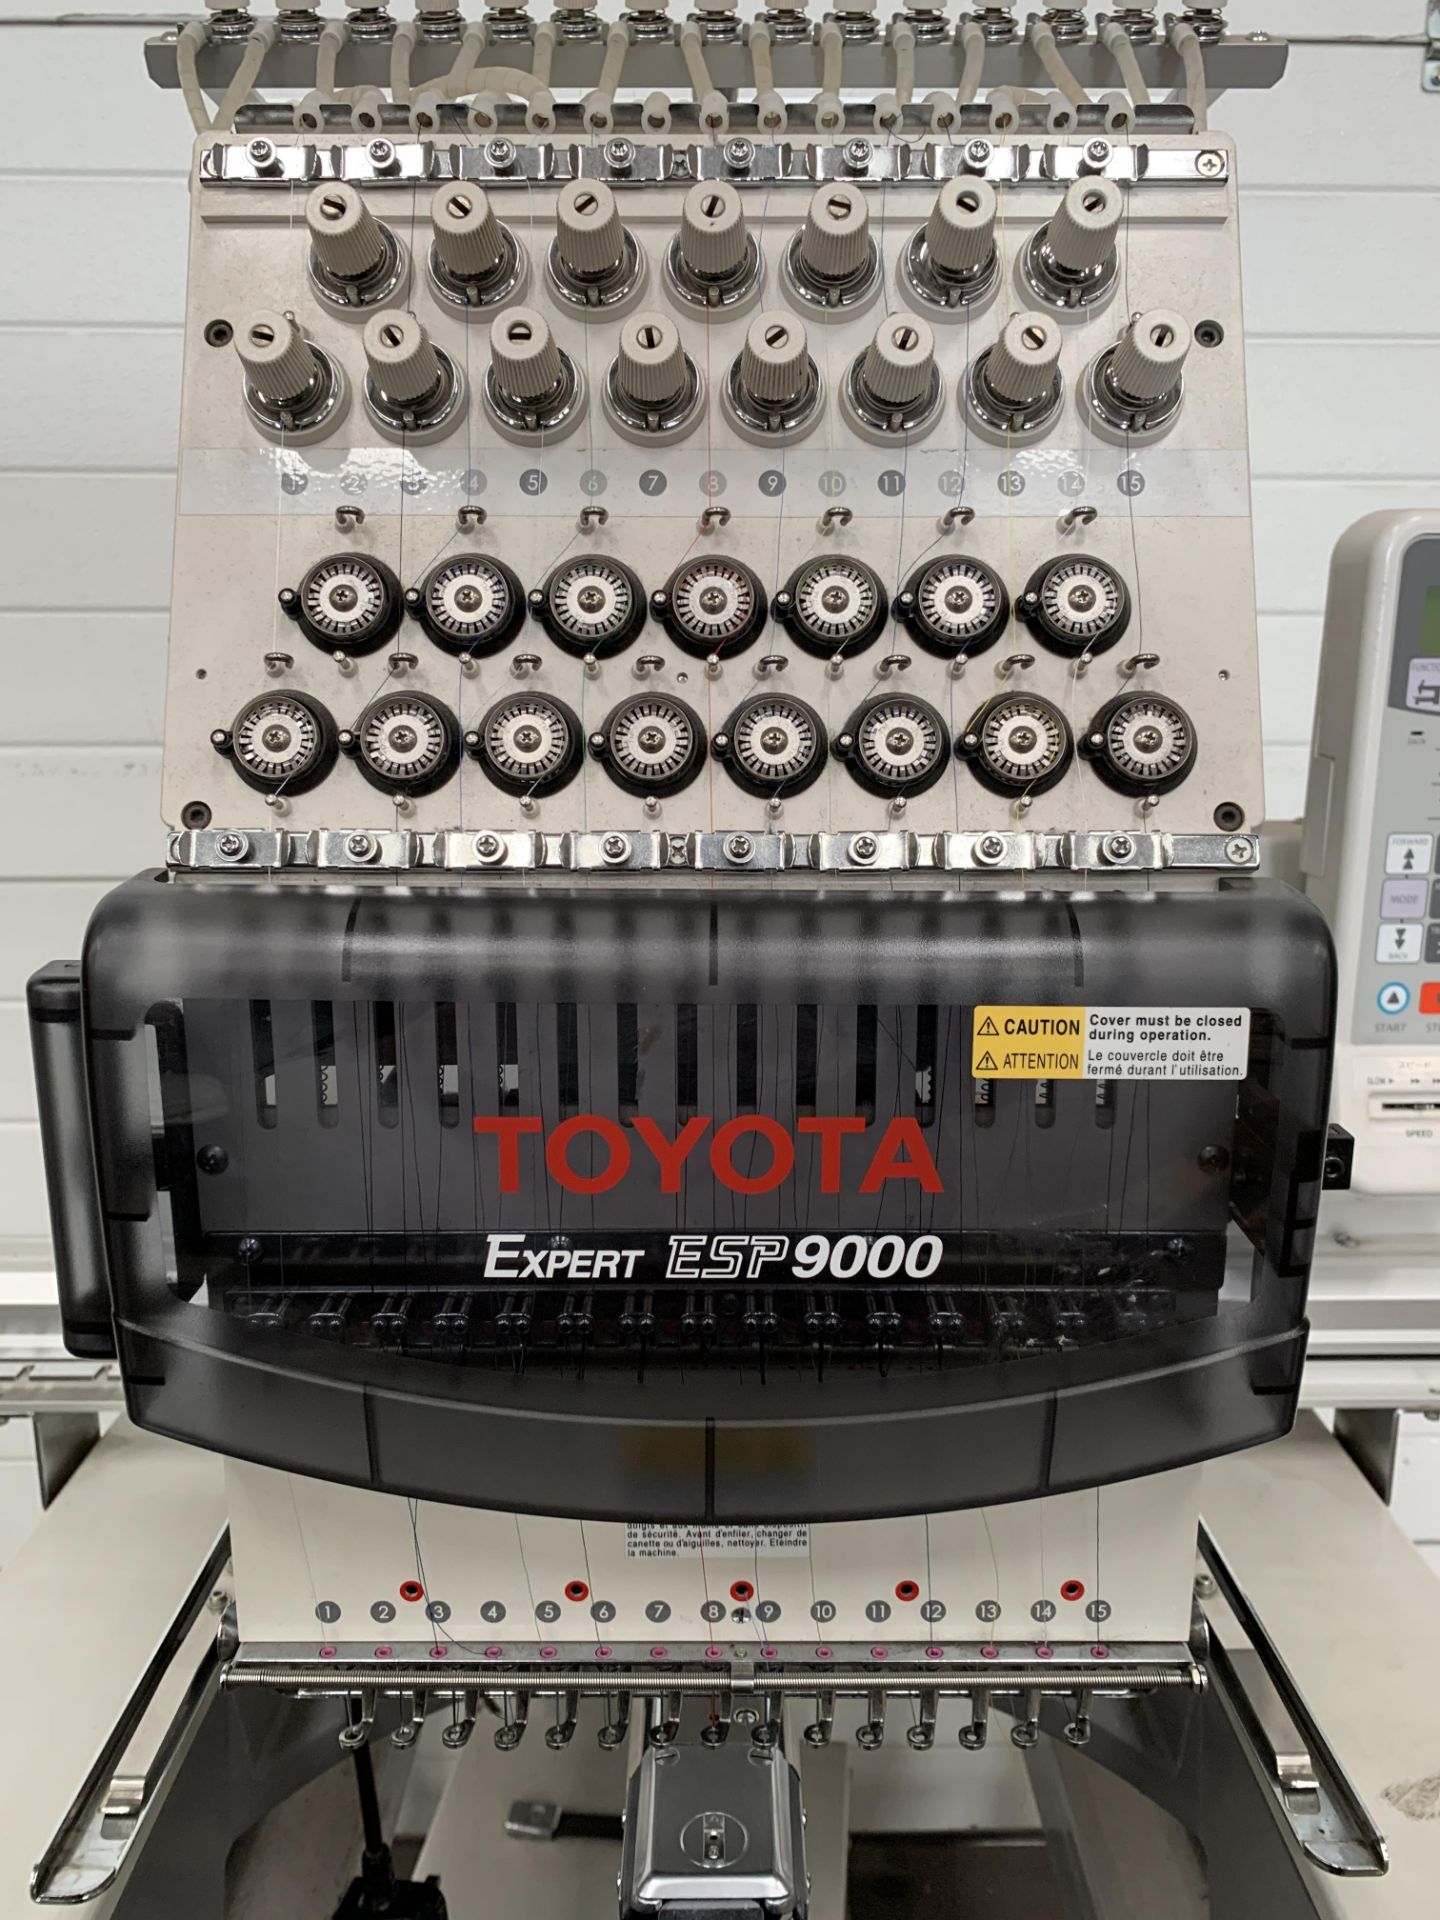 Toyota Expert Single Head Embroidery Machine - Image 5 of 12